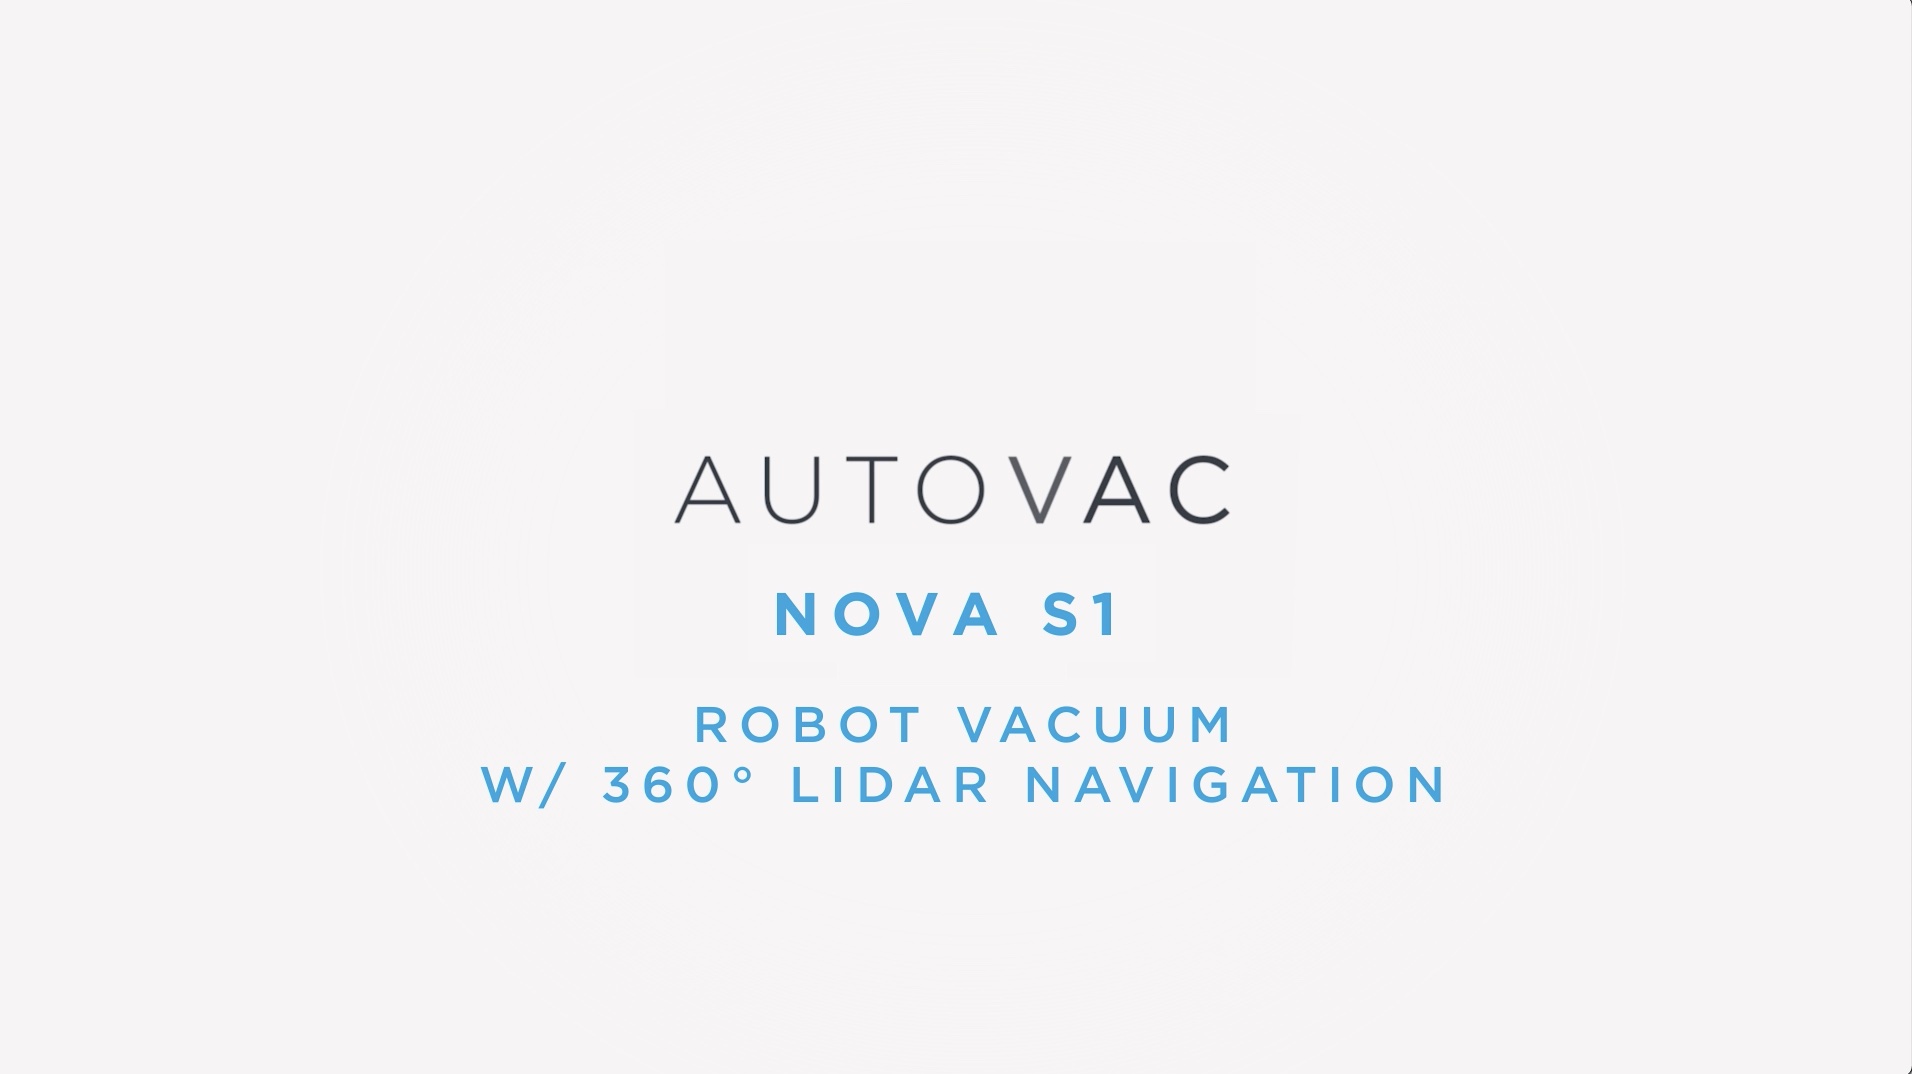 iHome AutoVac Nova S1 Robot Vacuum with LIDAR Navigation, 150 Min Runtime, 2700pa Suction - image 2 of 13